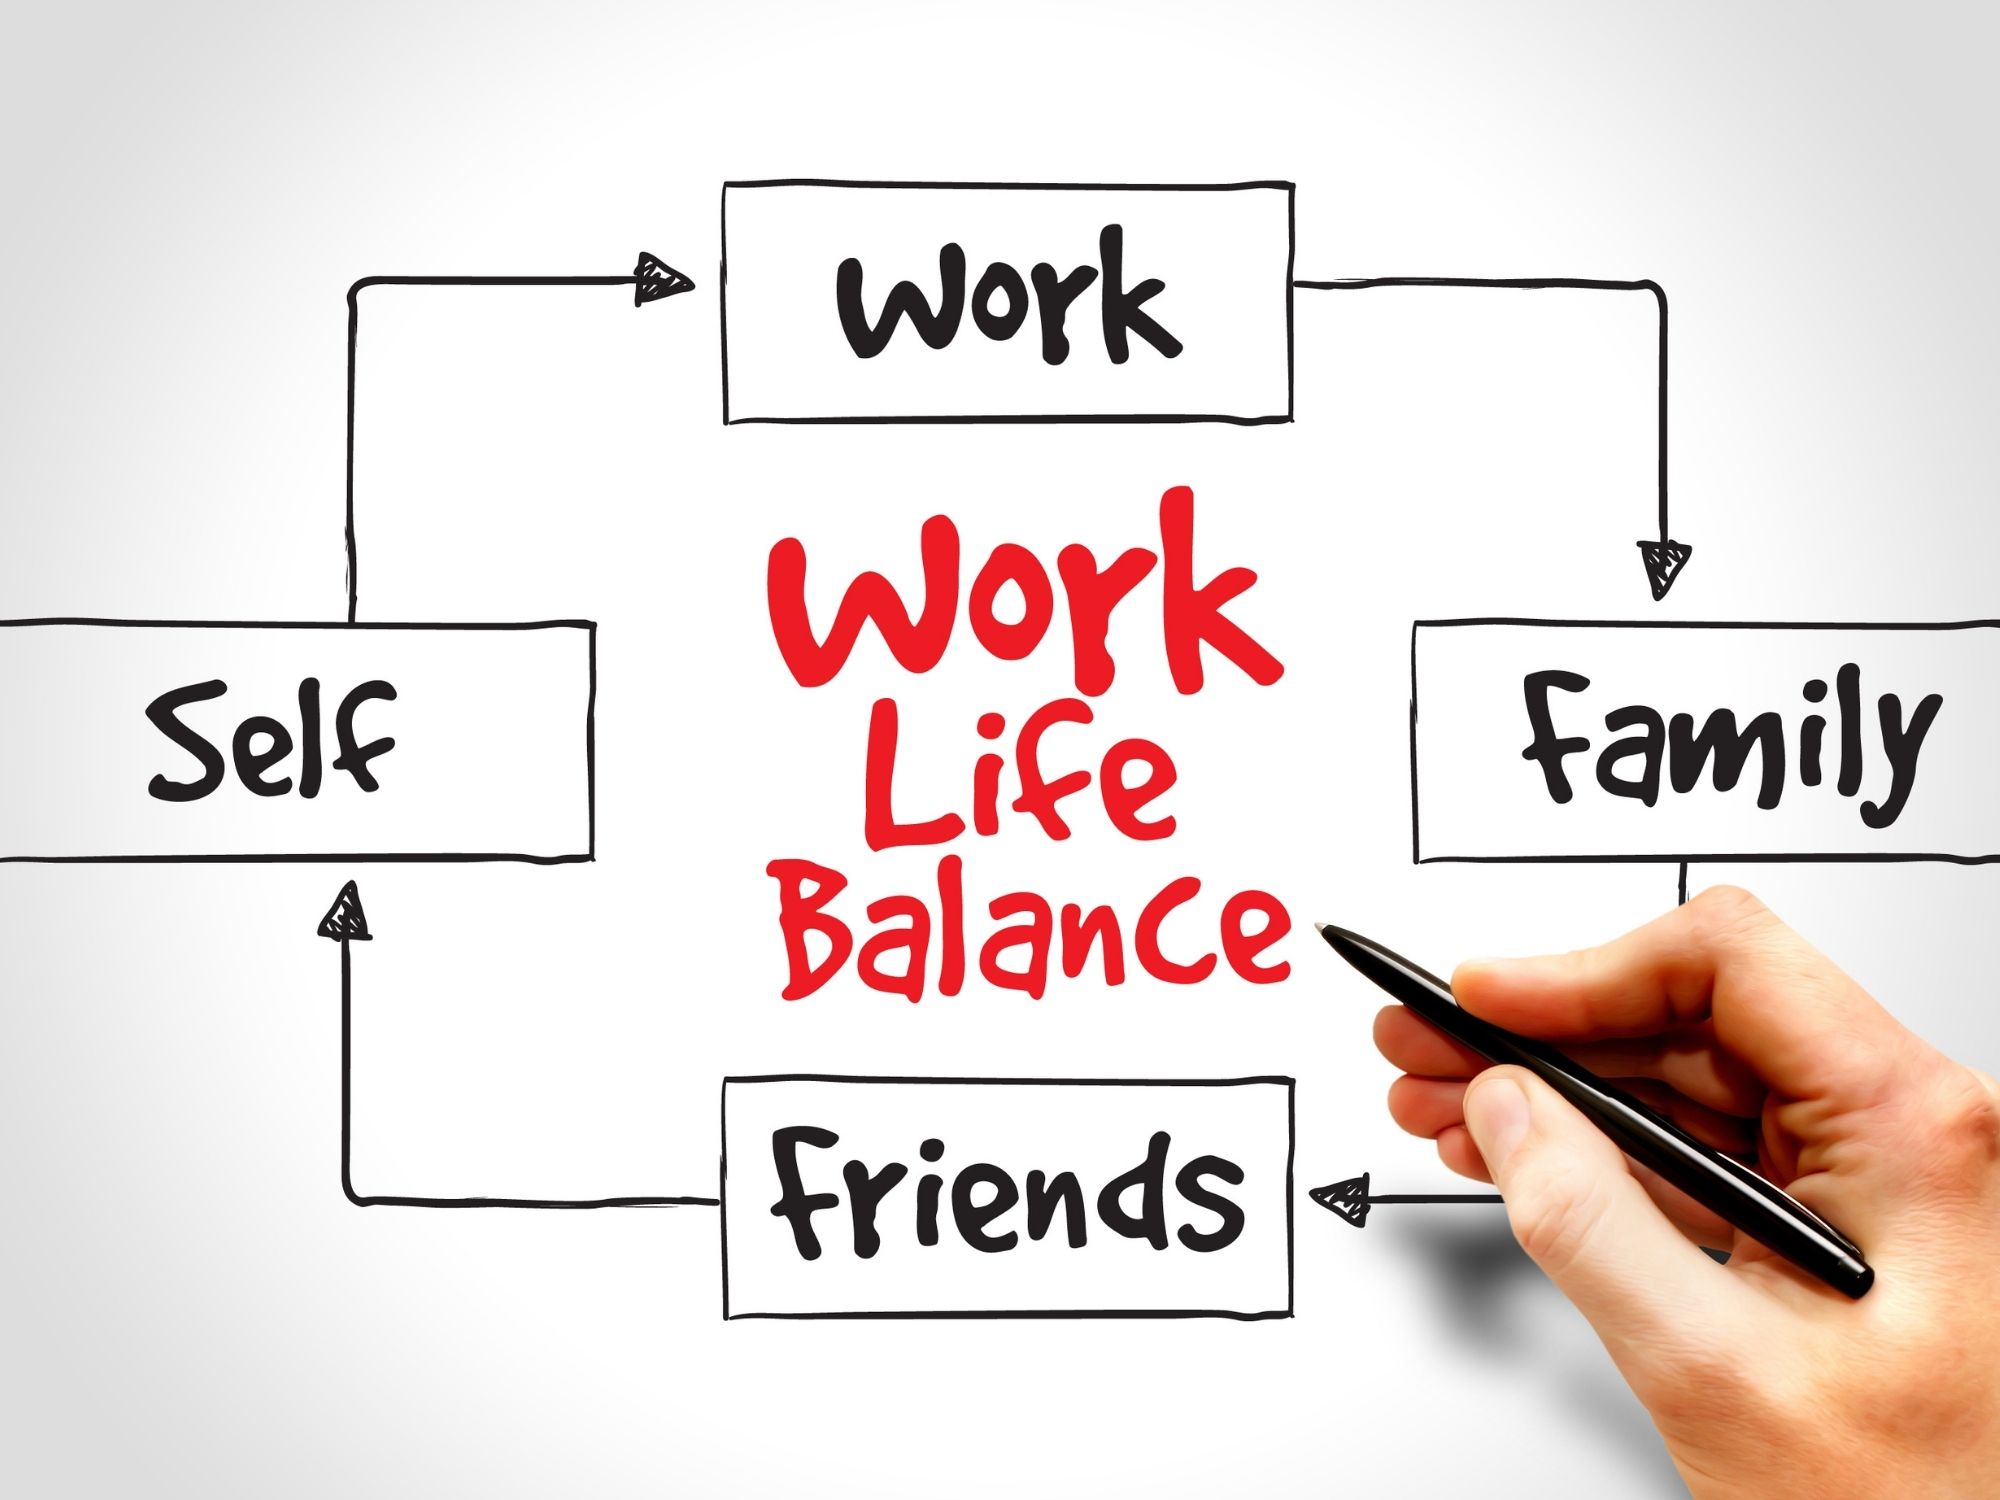 Work part of life. Work-Life Balance. Баланс работа жизнь. Ворк лайф баланс. Life and work.